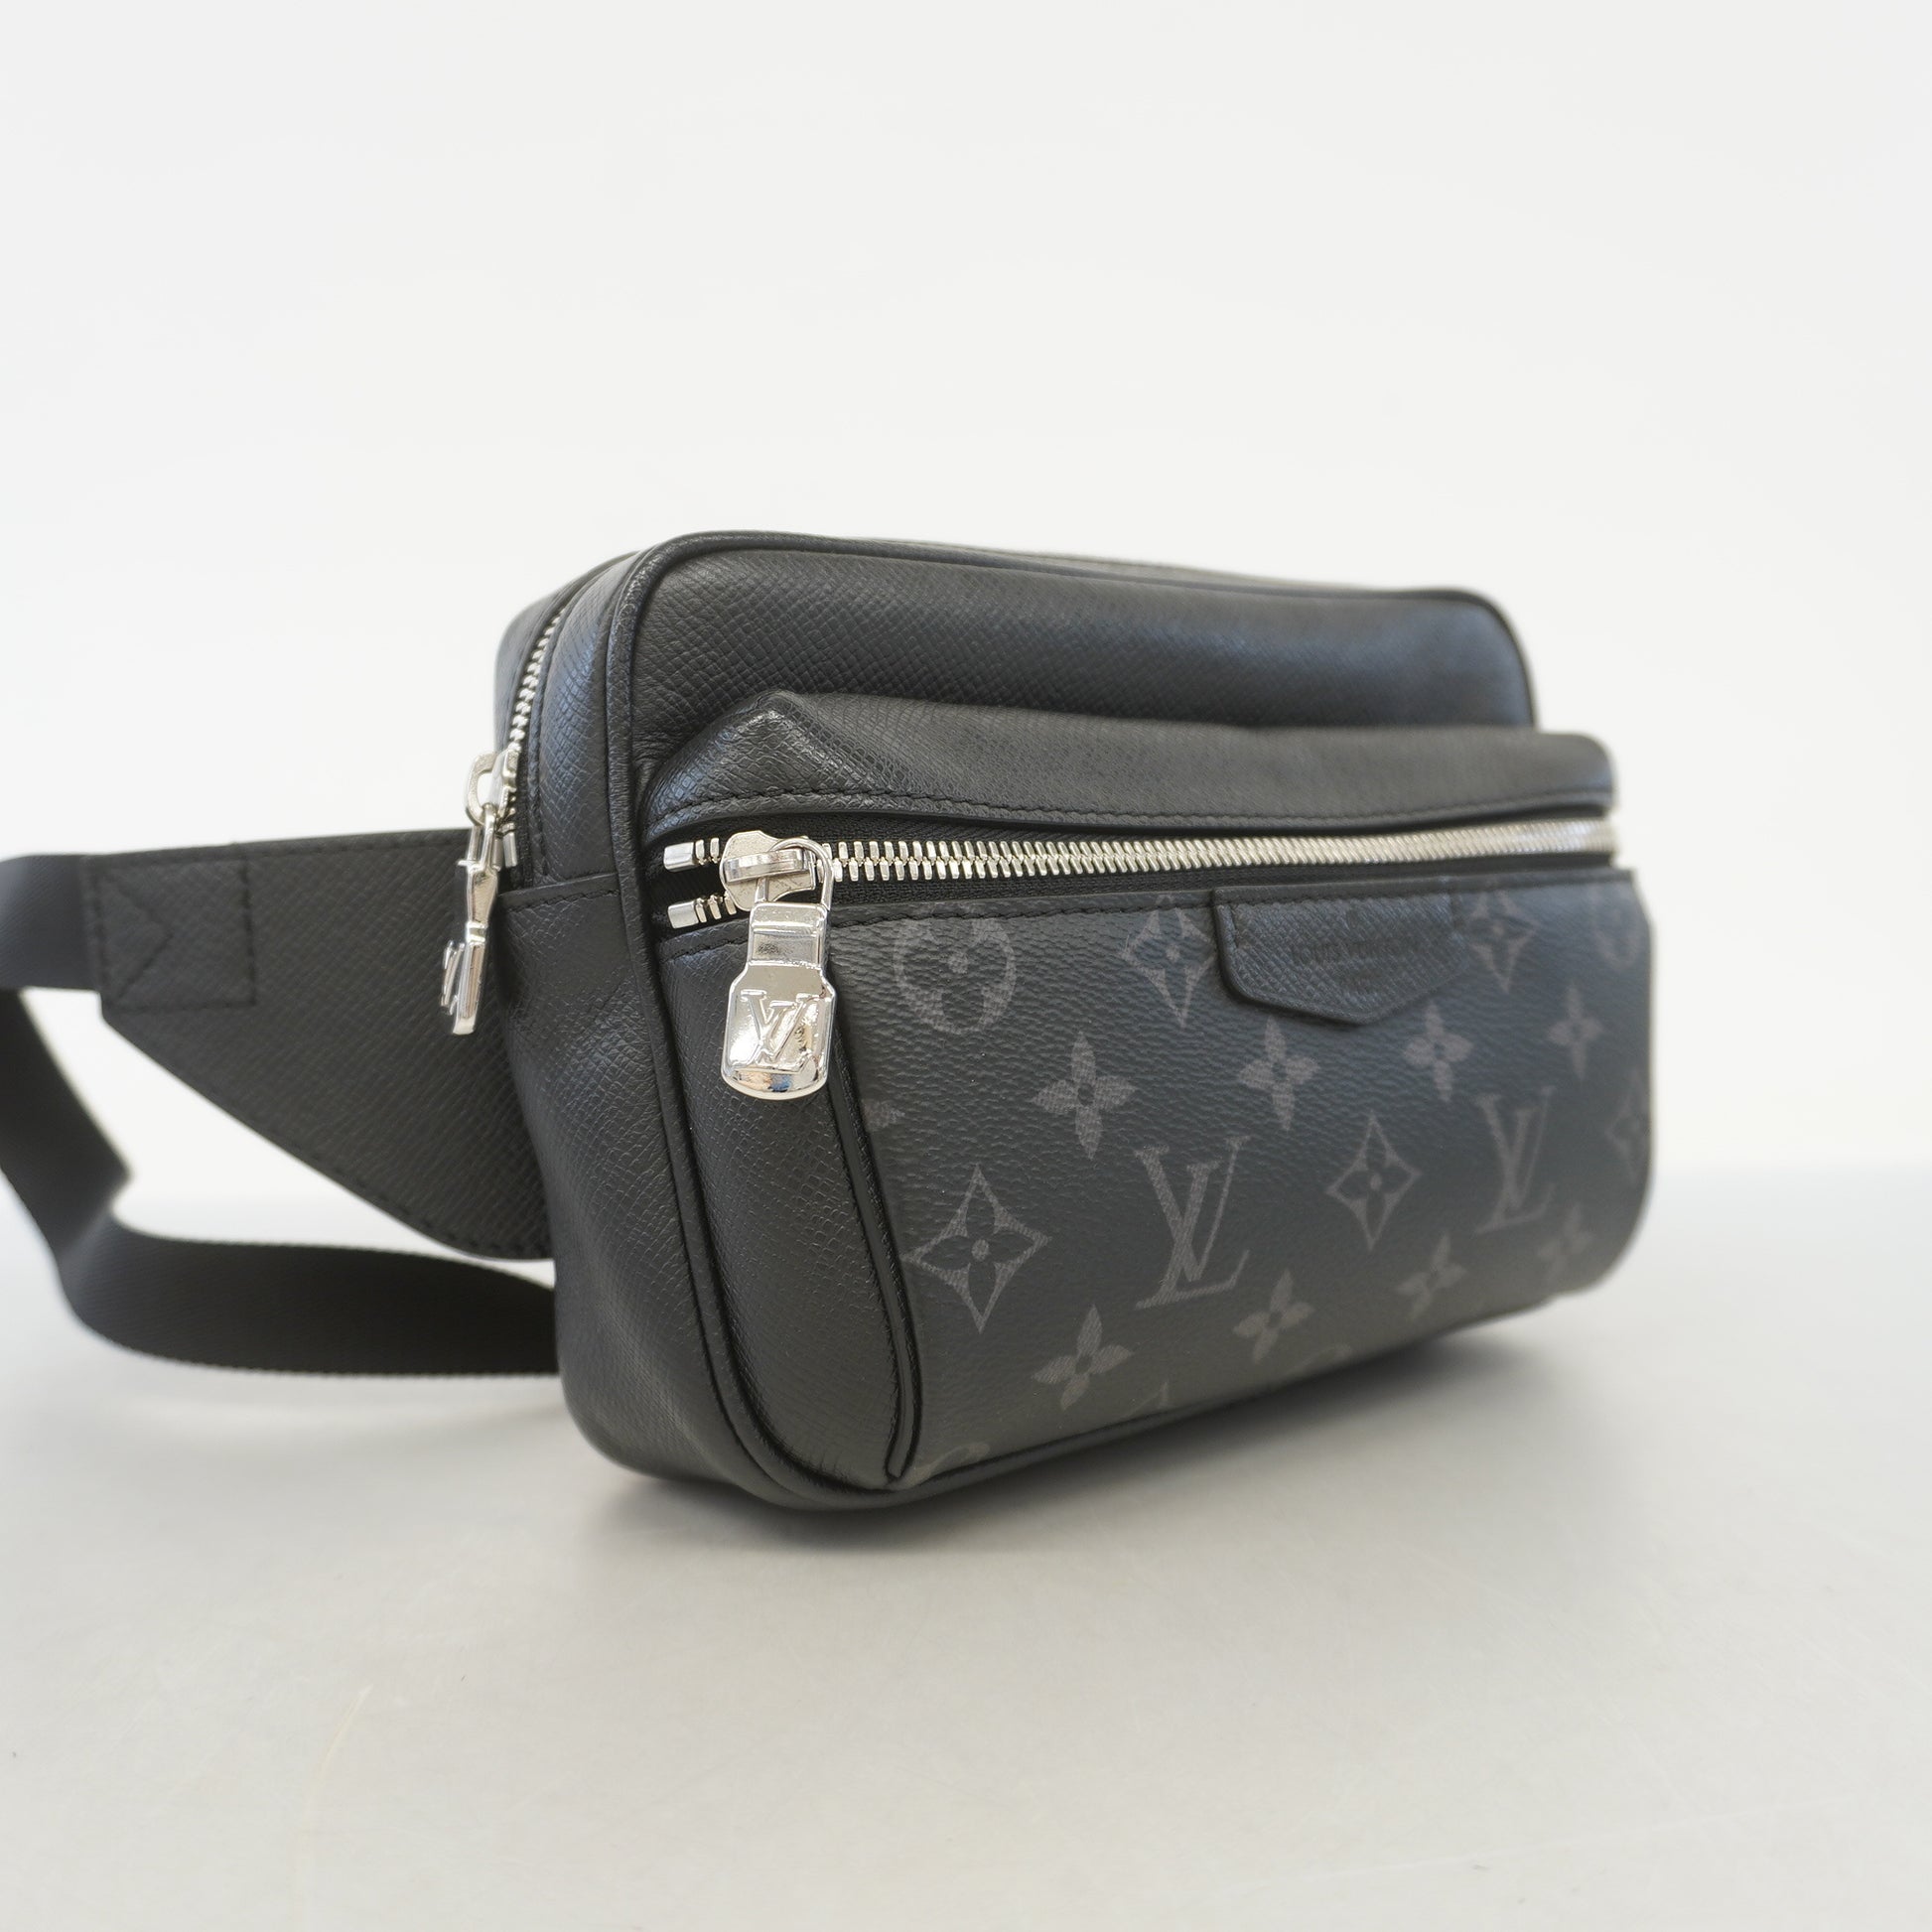 Shop Louis Vuitton Outdoor bumbag (M30245) by Repay